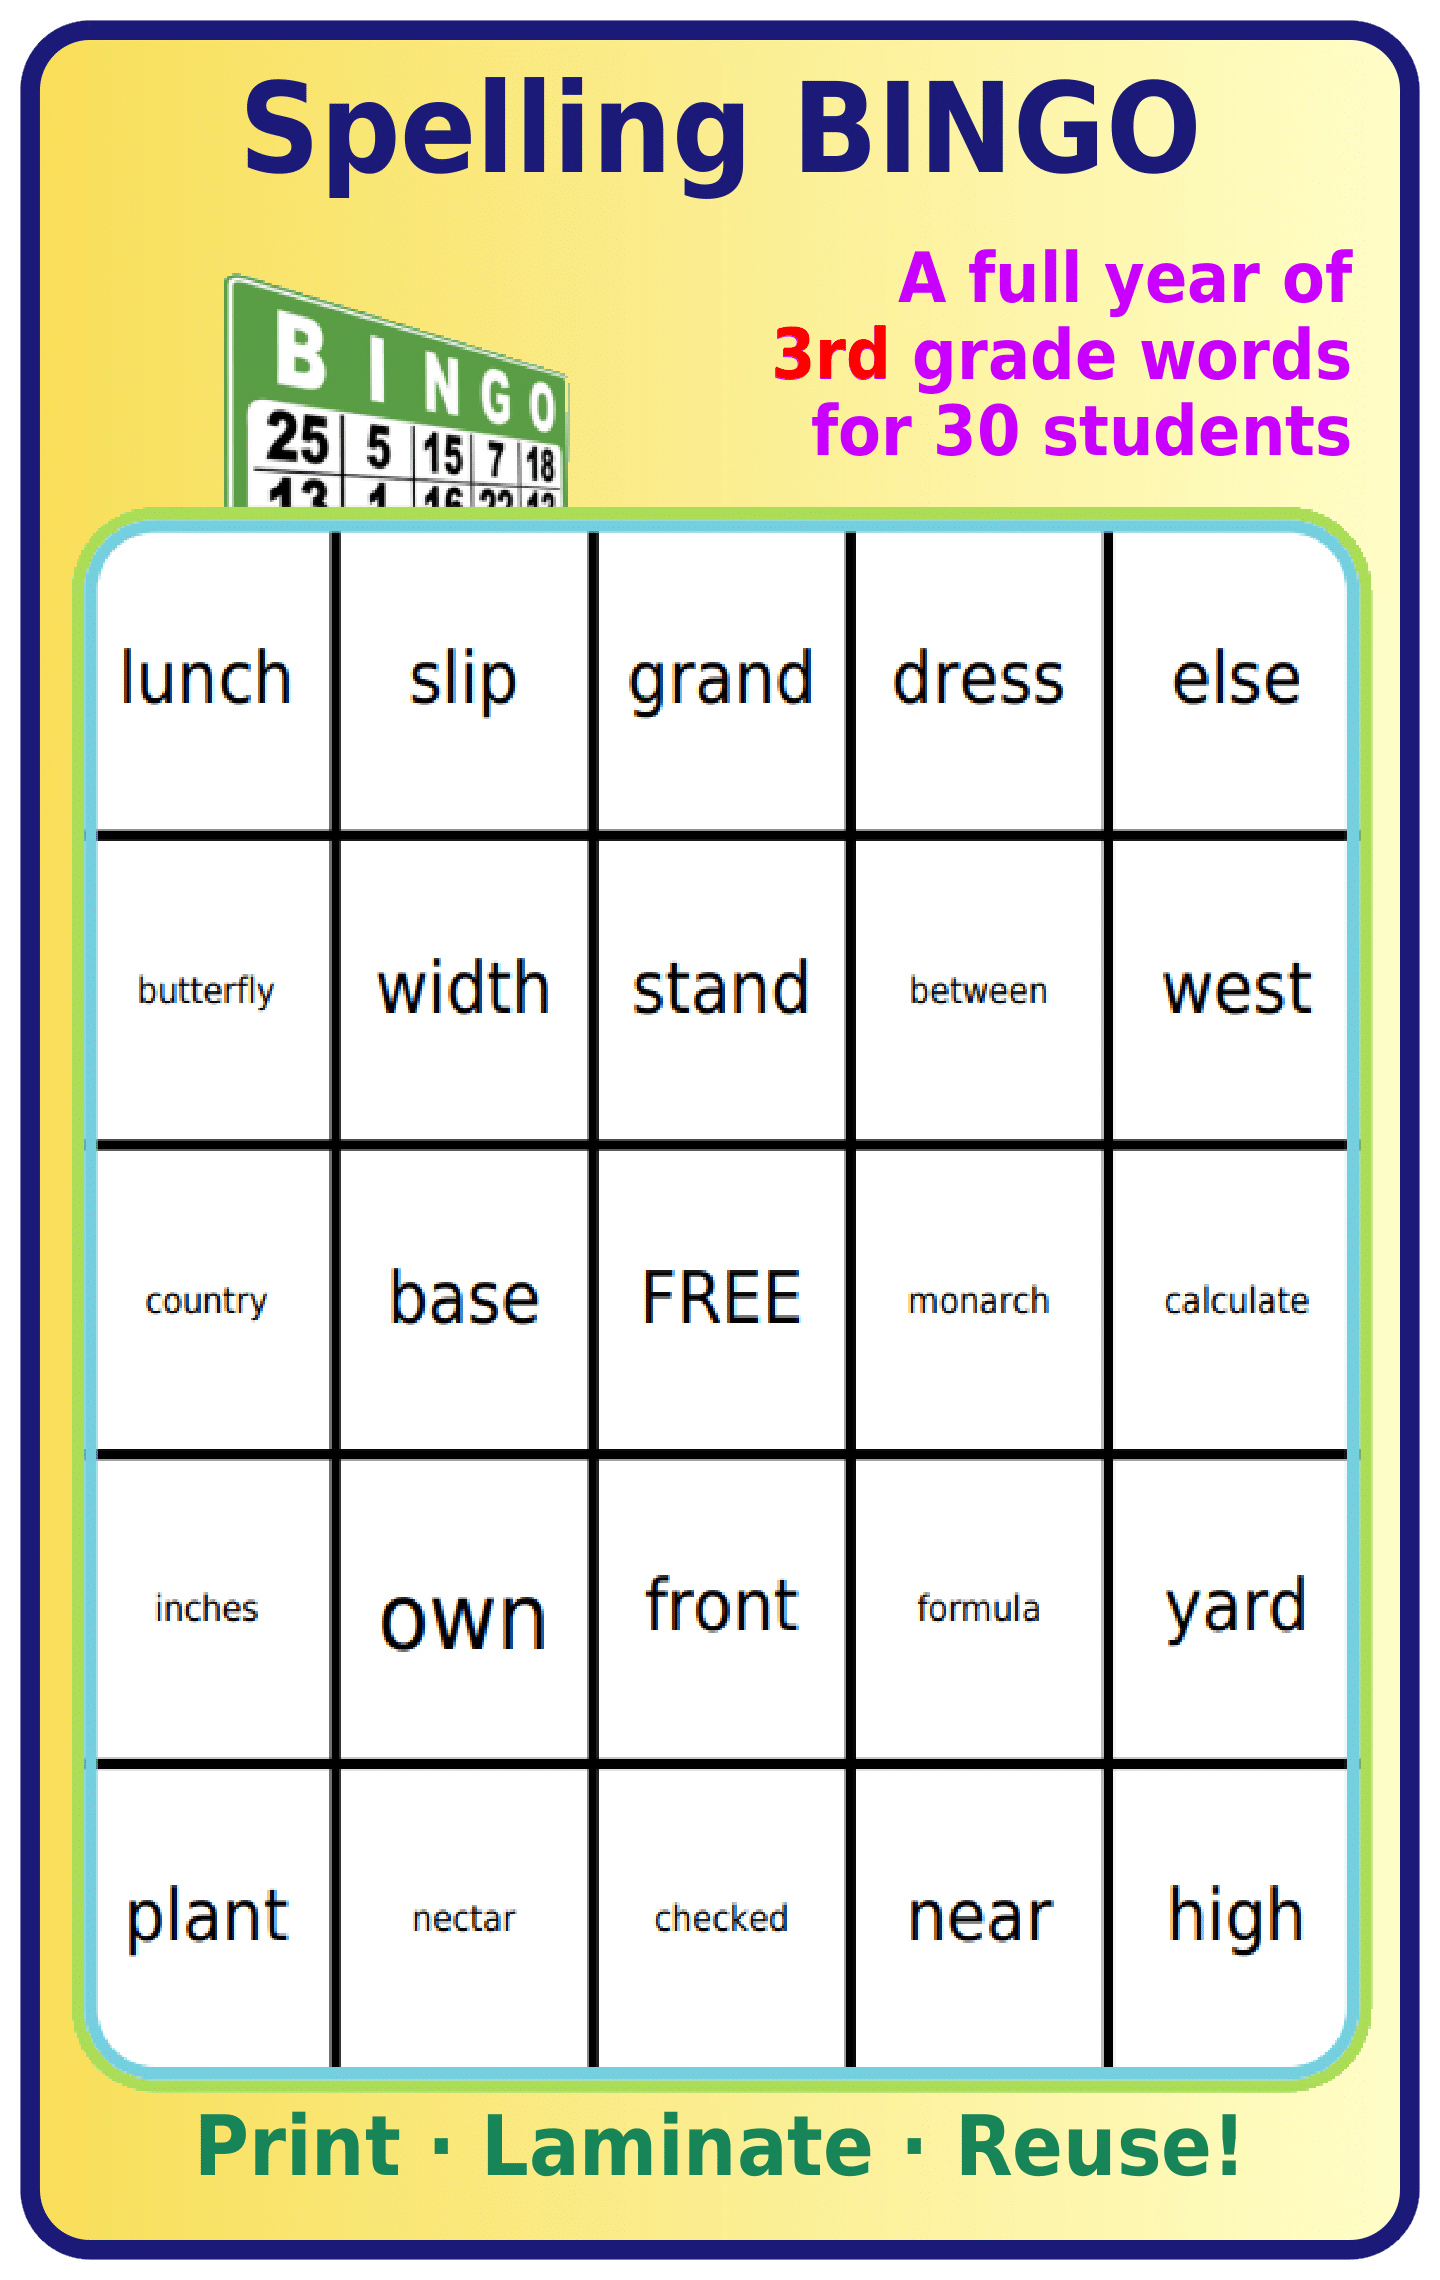 Bingo board with 3rd grade spelling words